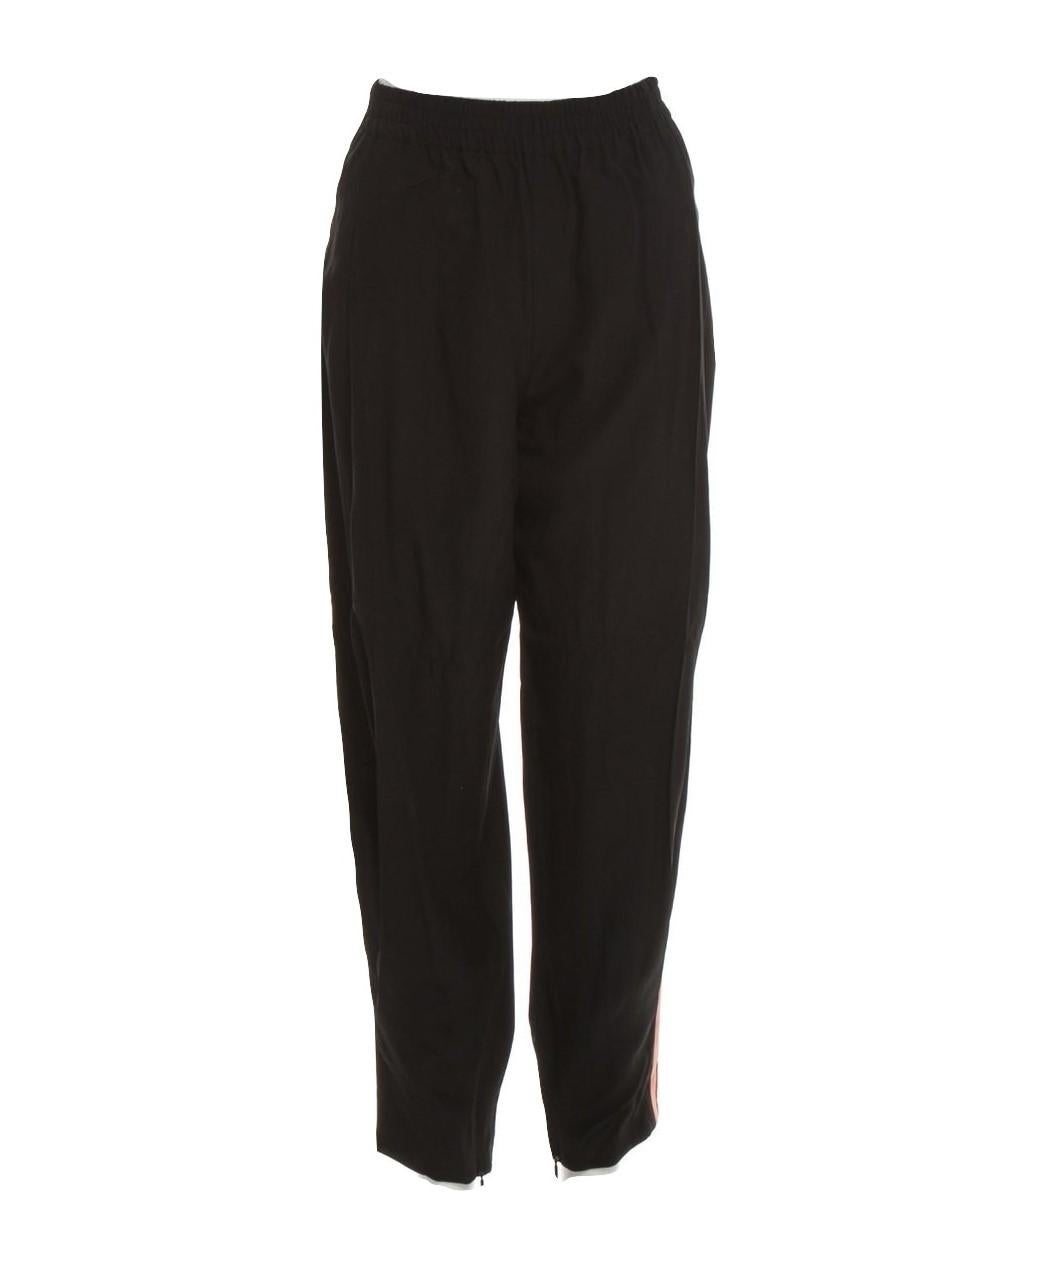 New Rare Gucci Runway Ad Silk Pantsuit Jacket & Pants S/S 2014 Sz 44/38  14